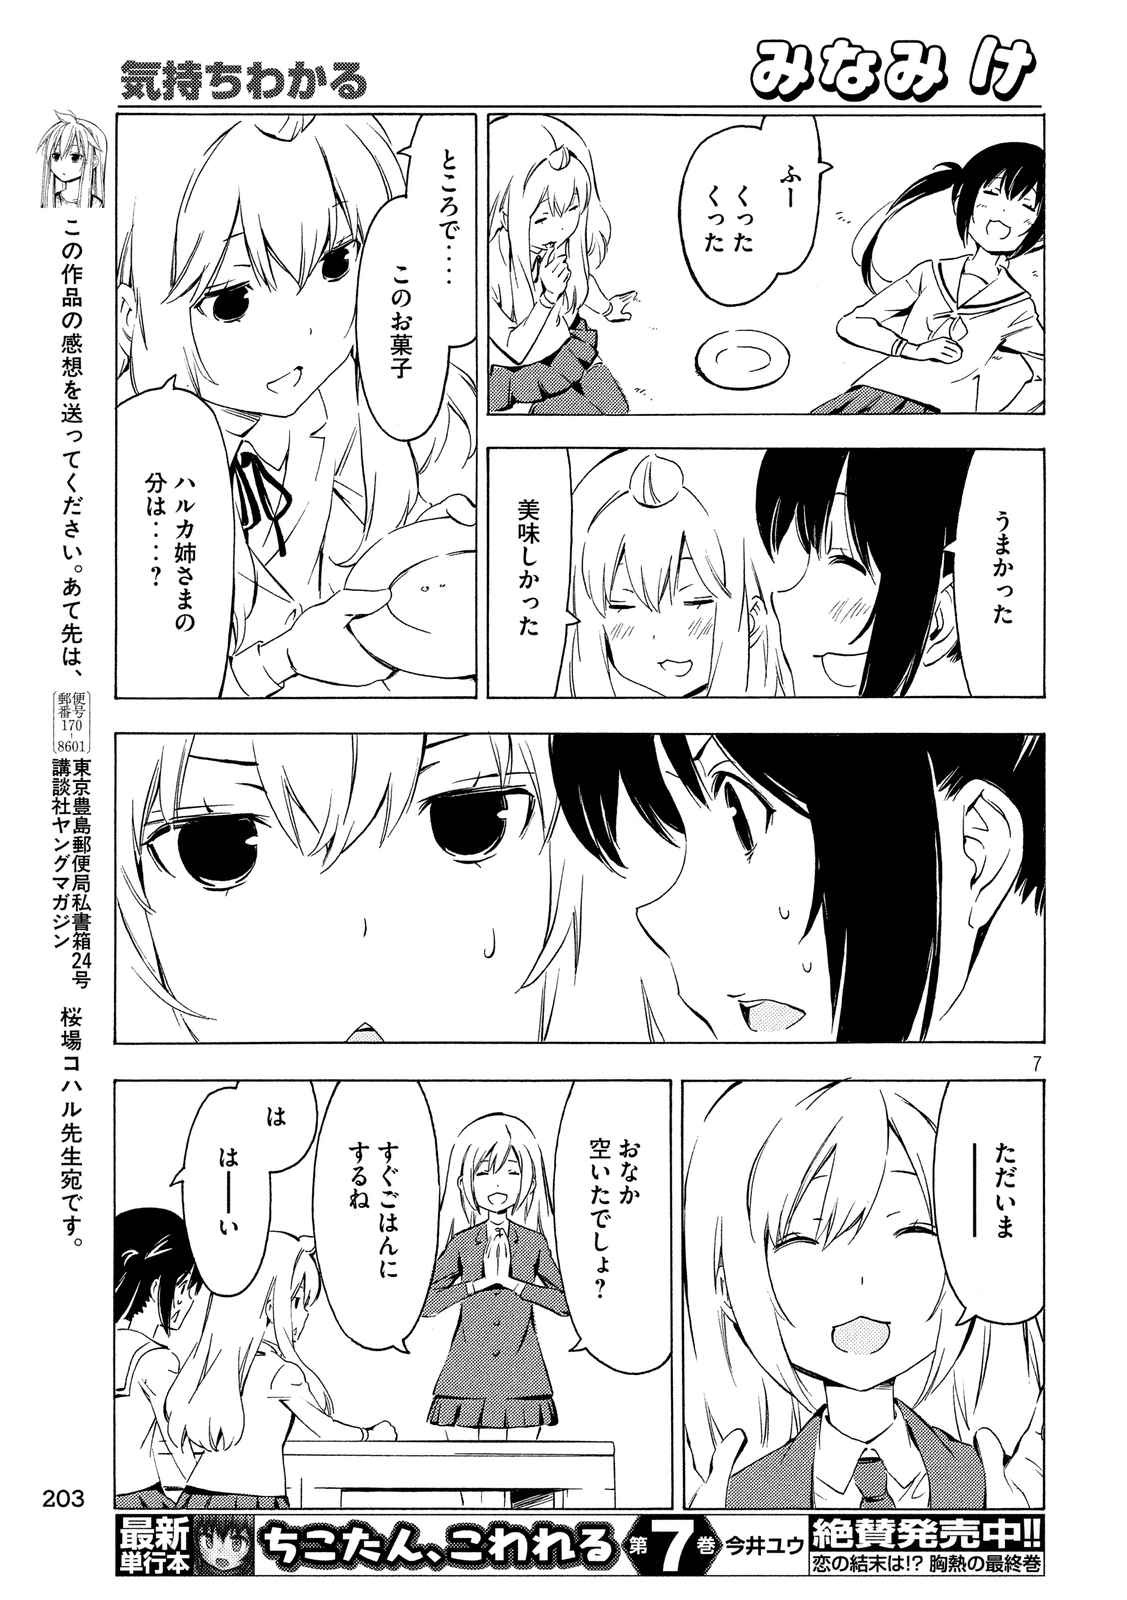 Minami-ke - Chapter 311 - Page 7